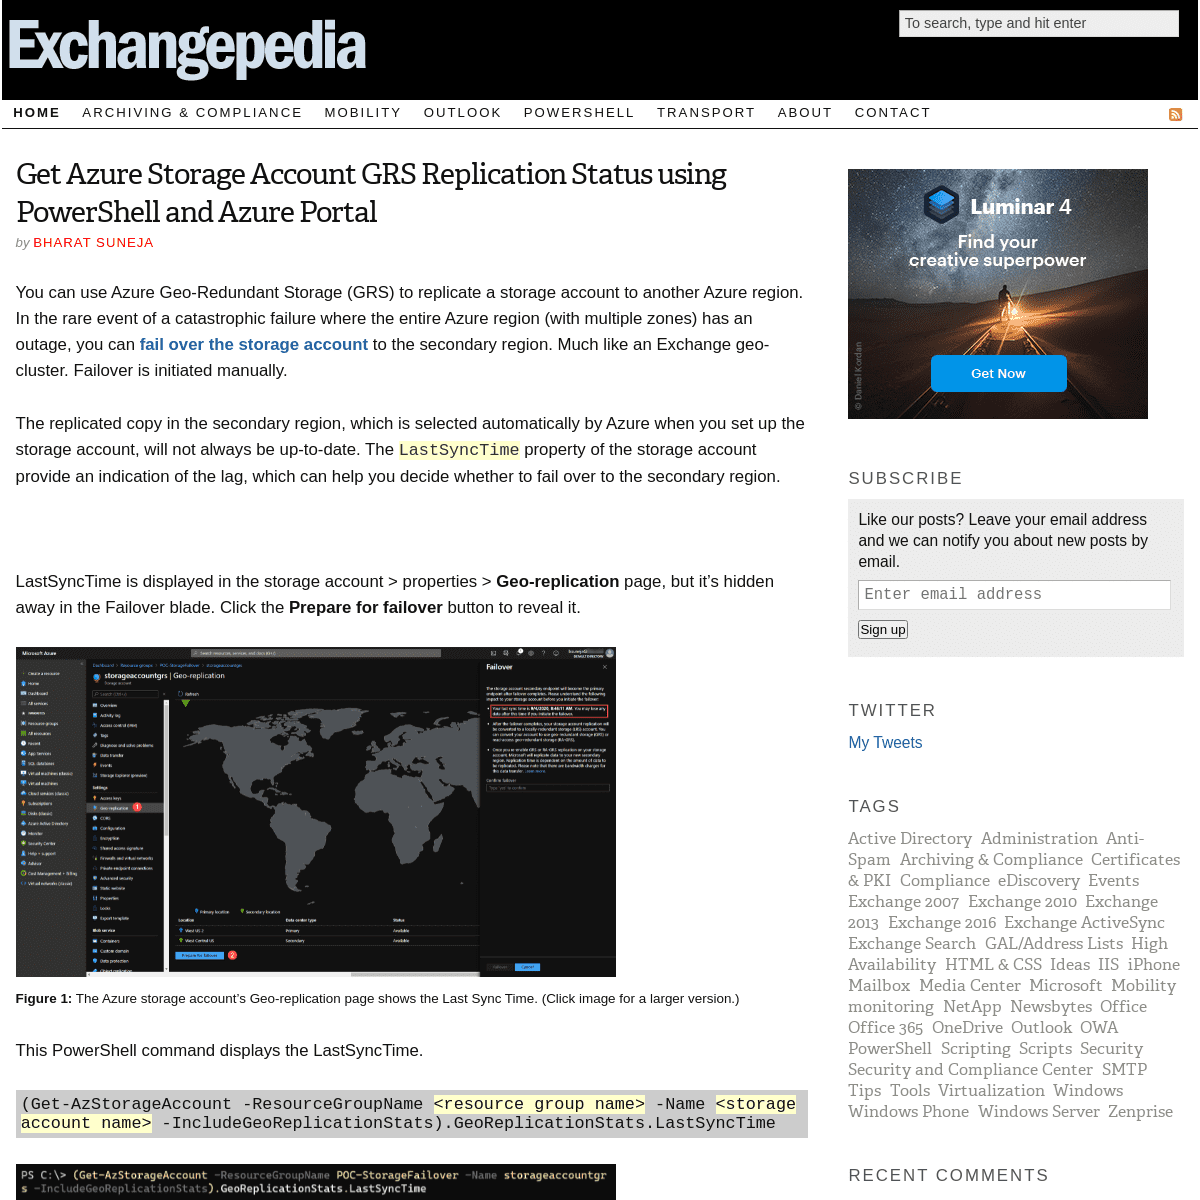 A complete backup of https://exchangepedia.com